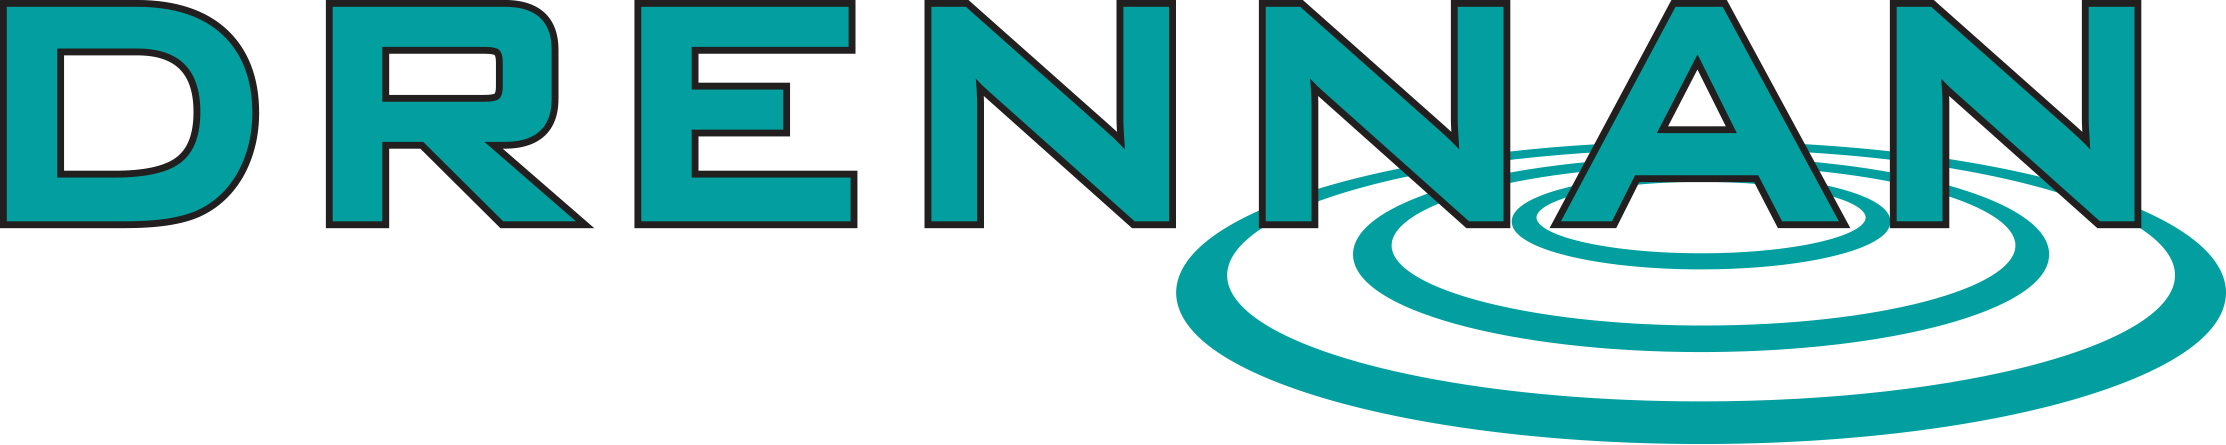 drennan-logo